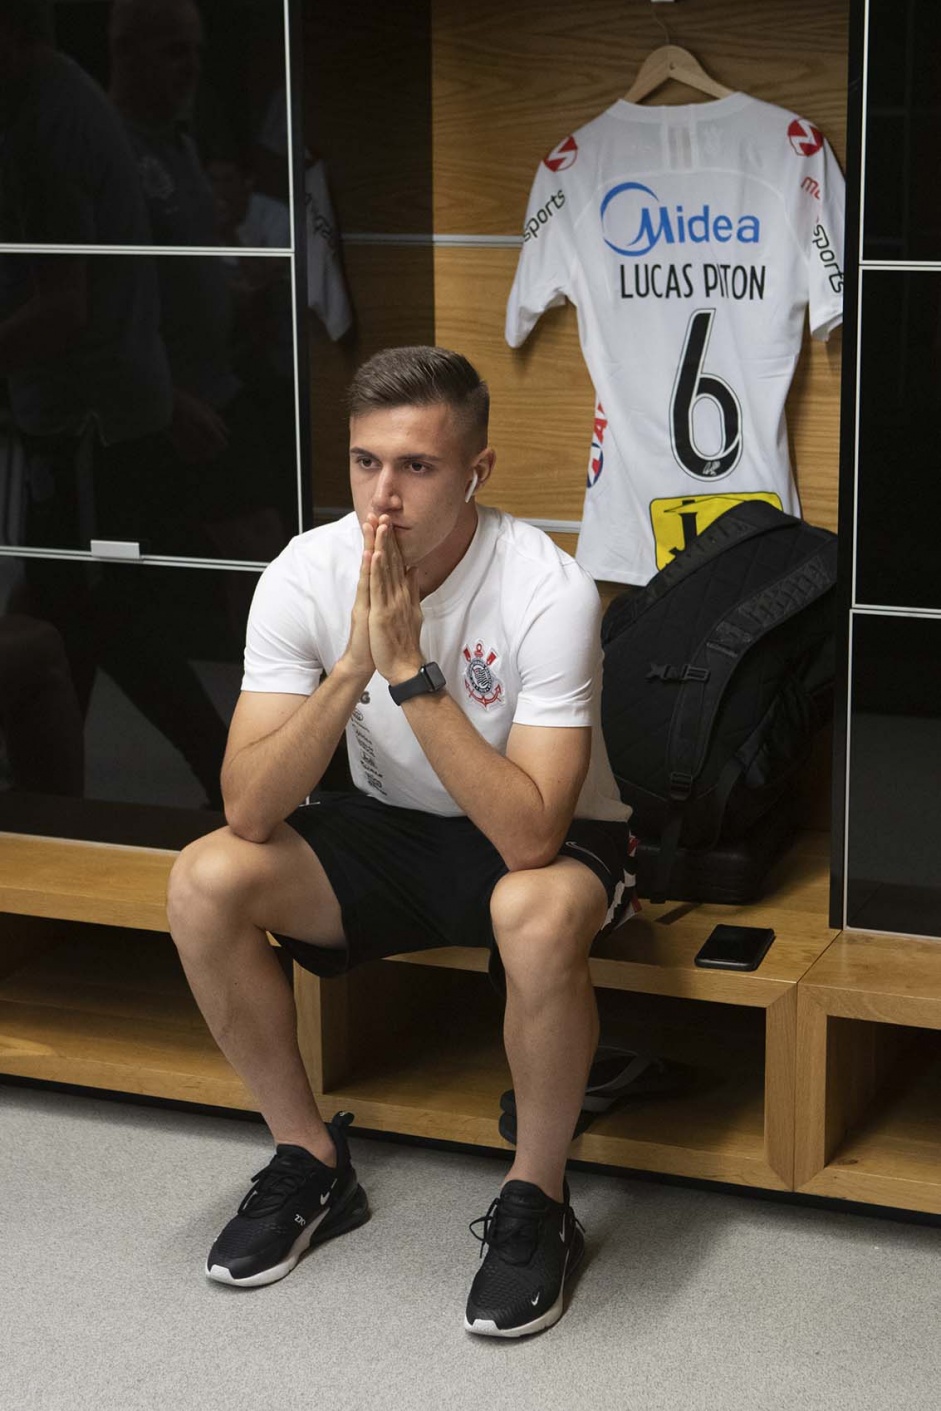 Lucas Piton se concentra antes da partida contra a Inter de Limeira